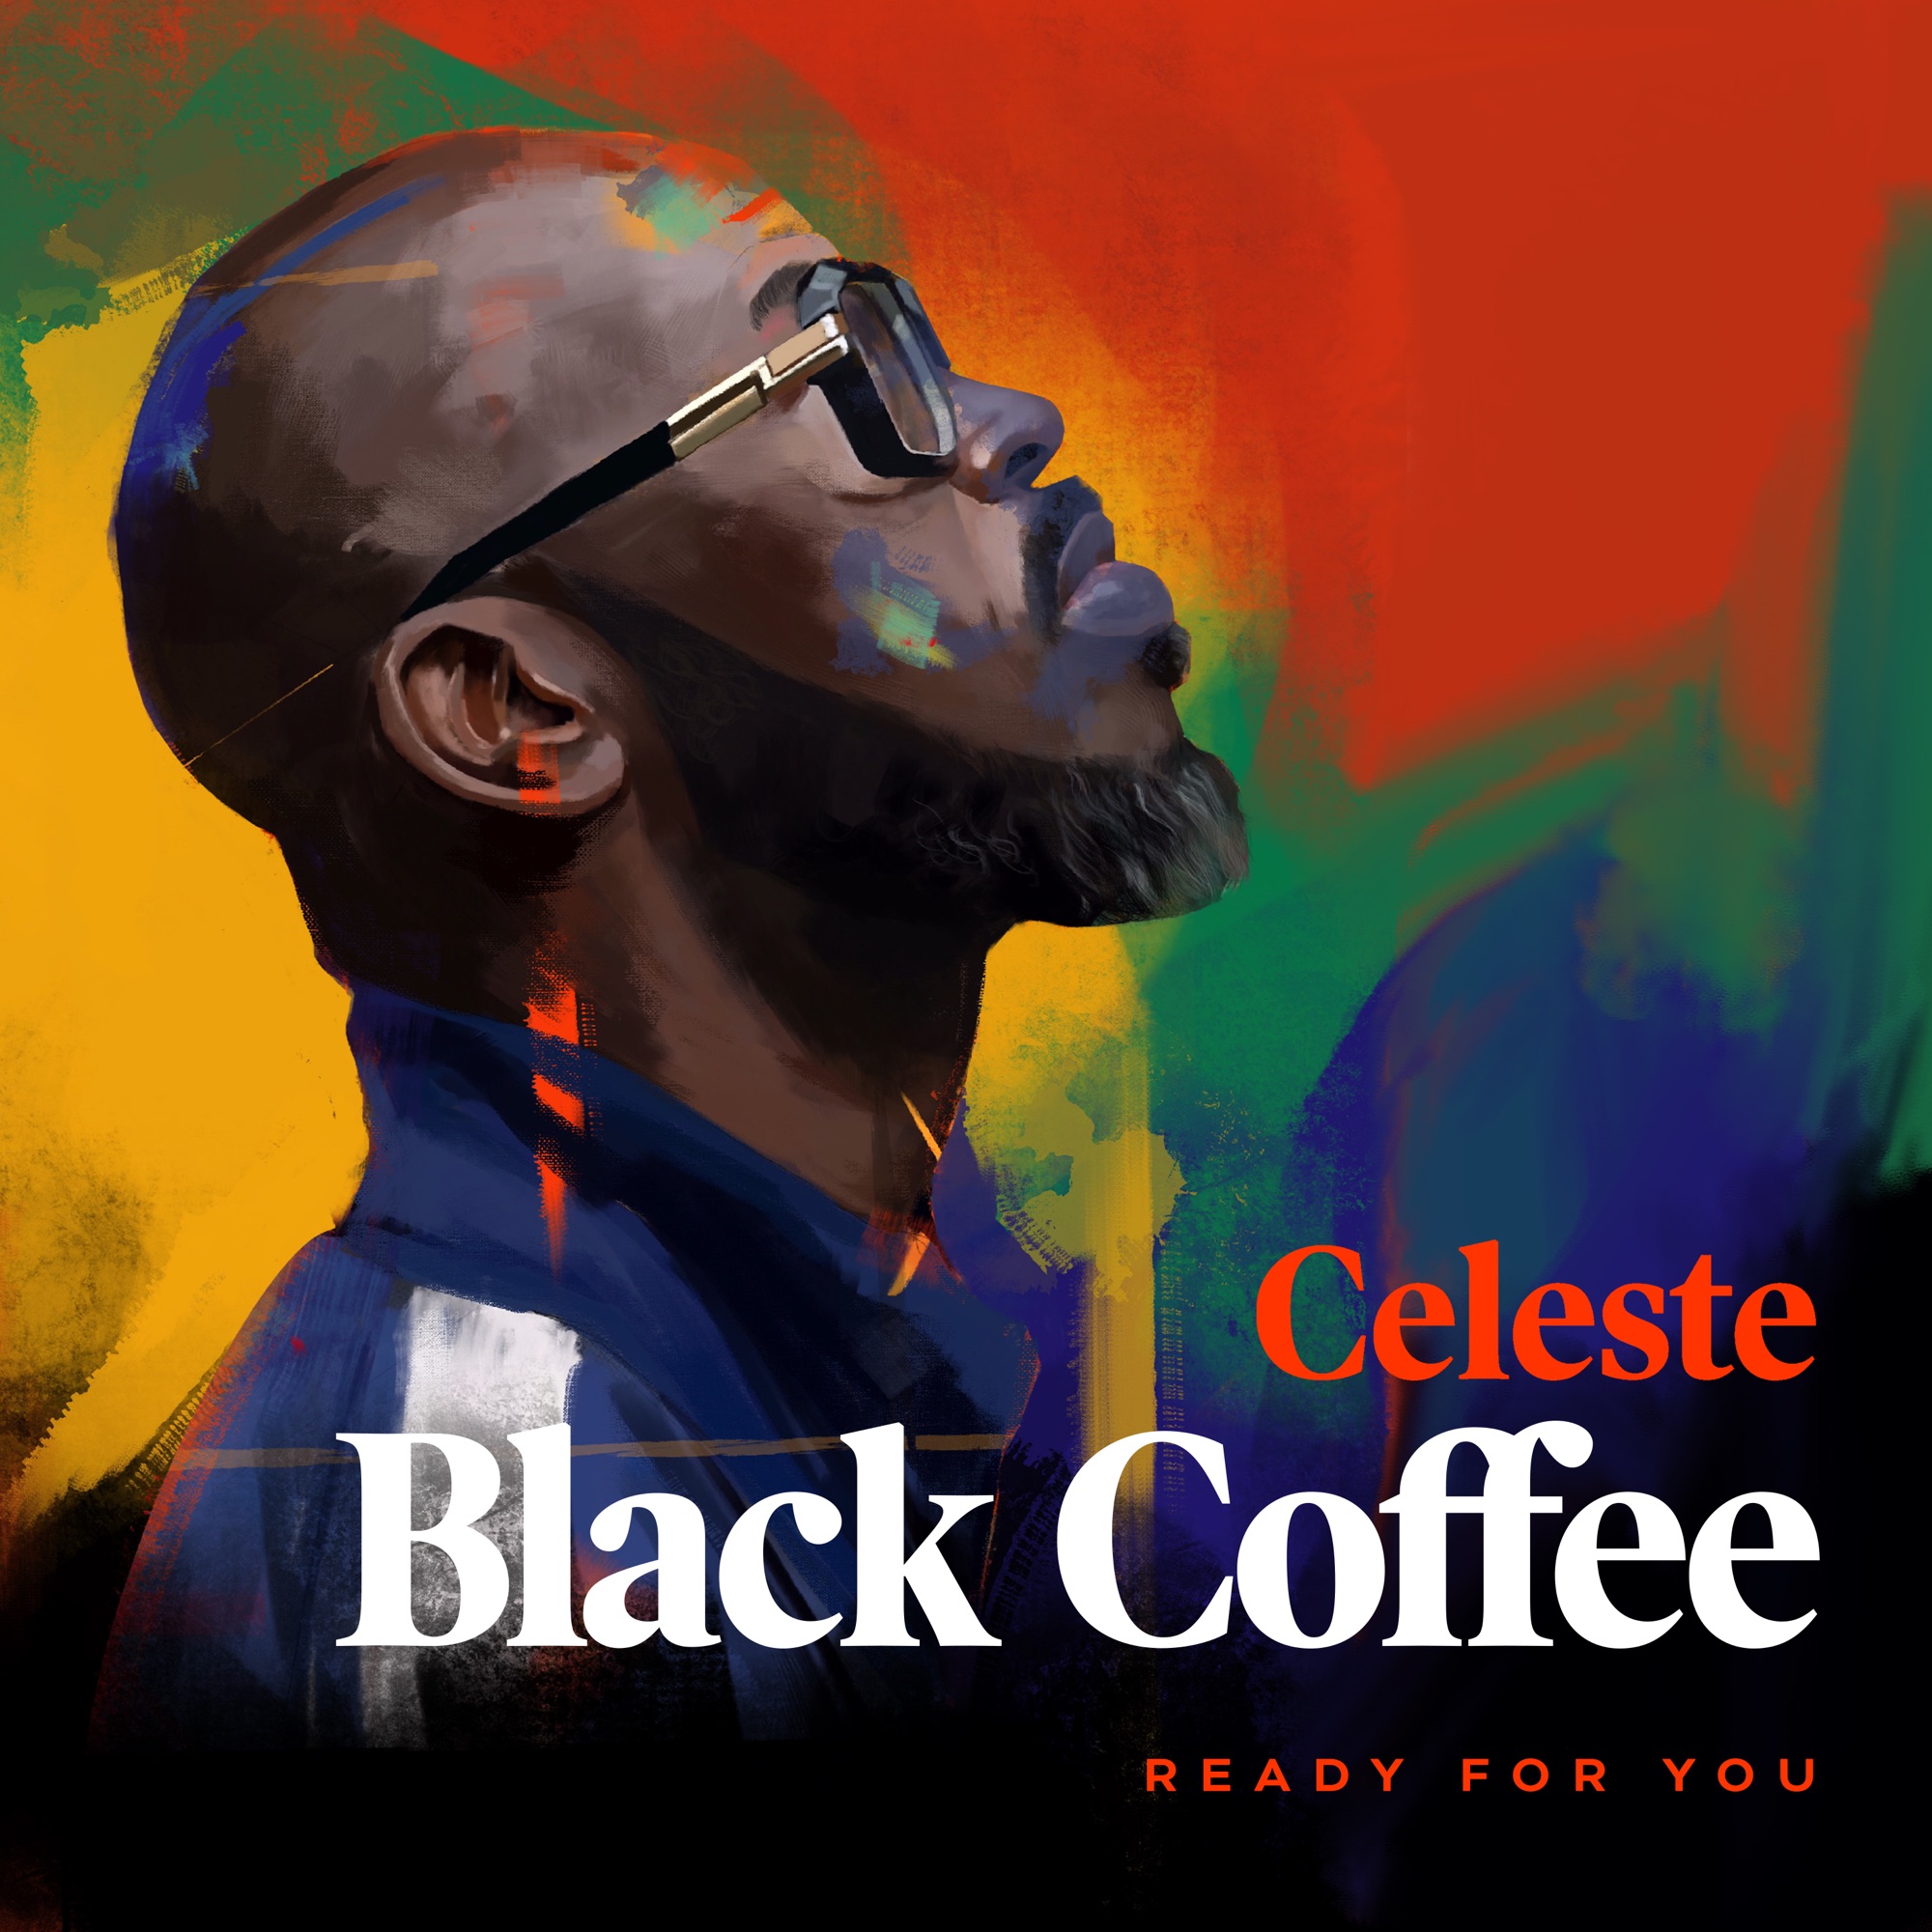 Black Coffee - Ready for You (feat. Celeste) - Single